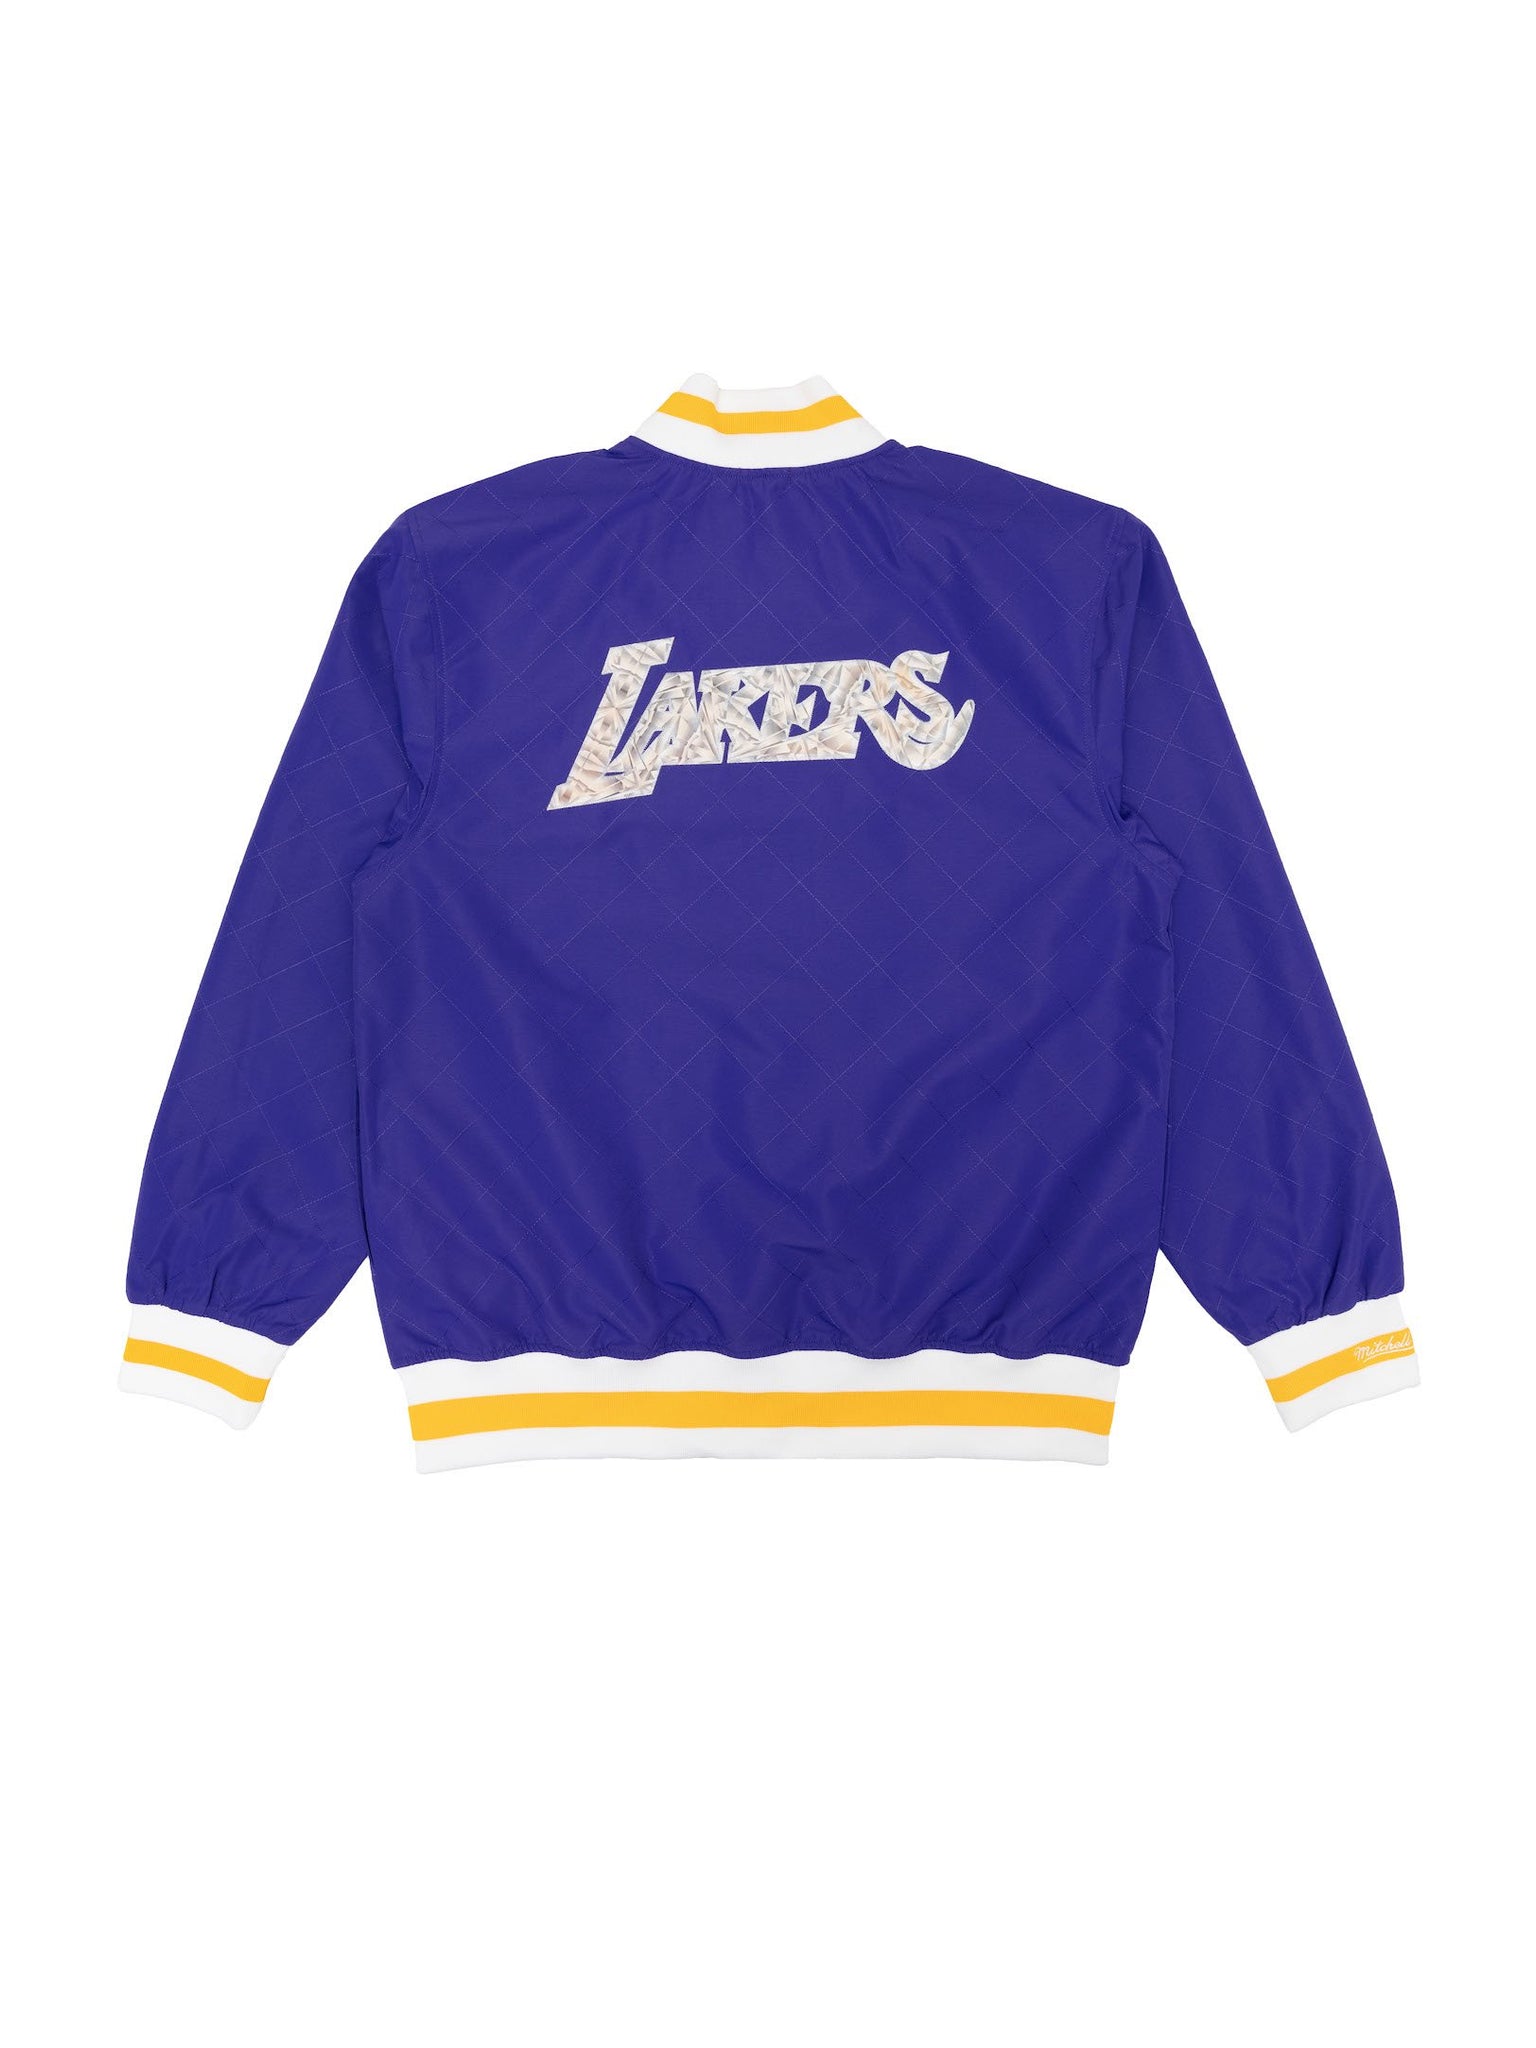 Los Angeles Lakers 75th Anniversary NBA Warm Up Jacket